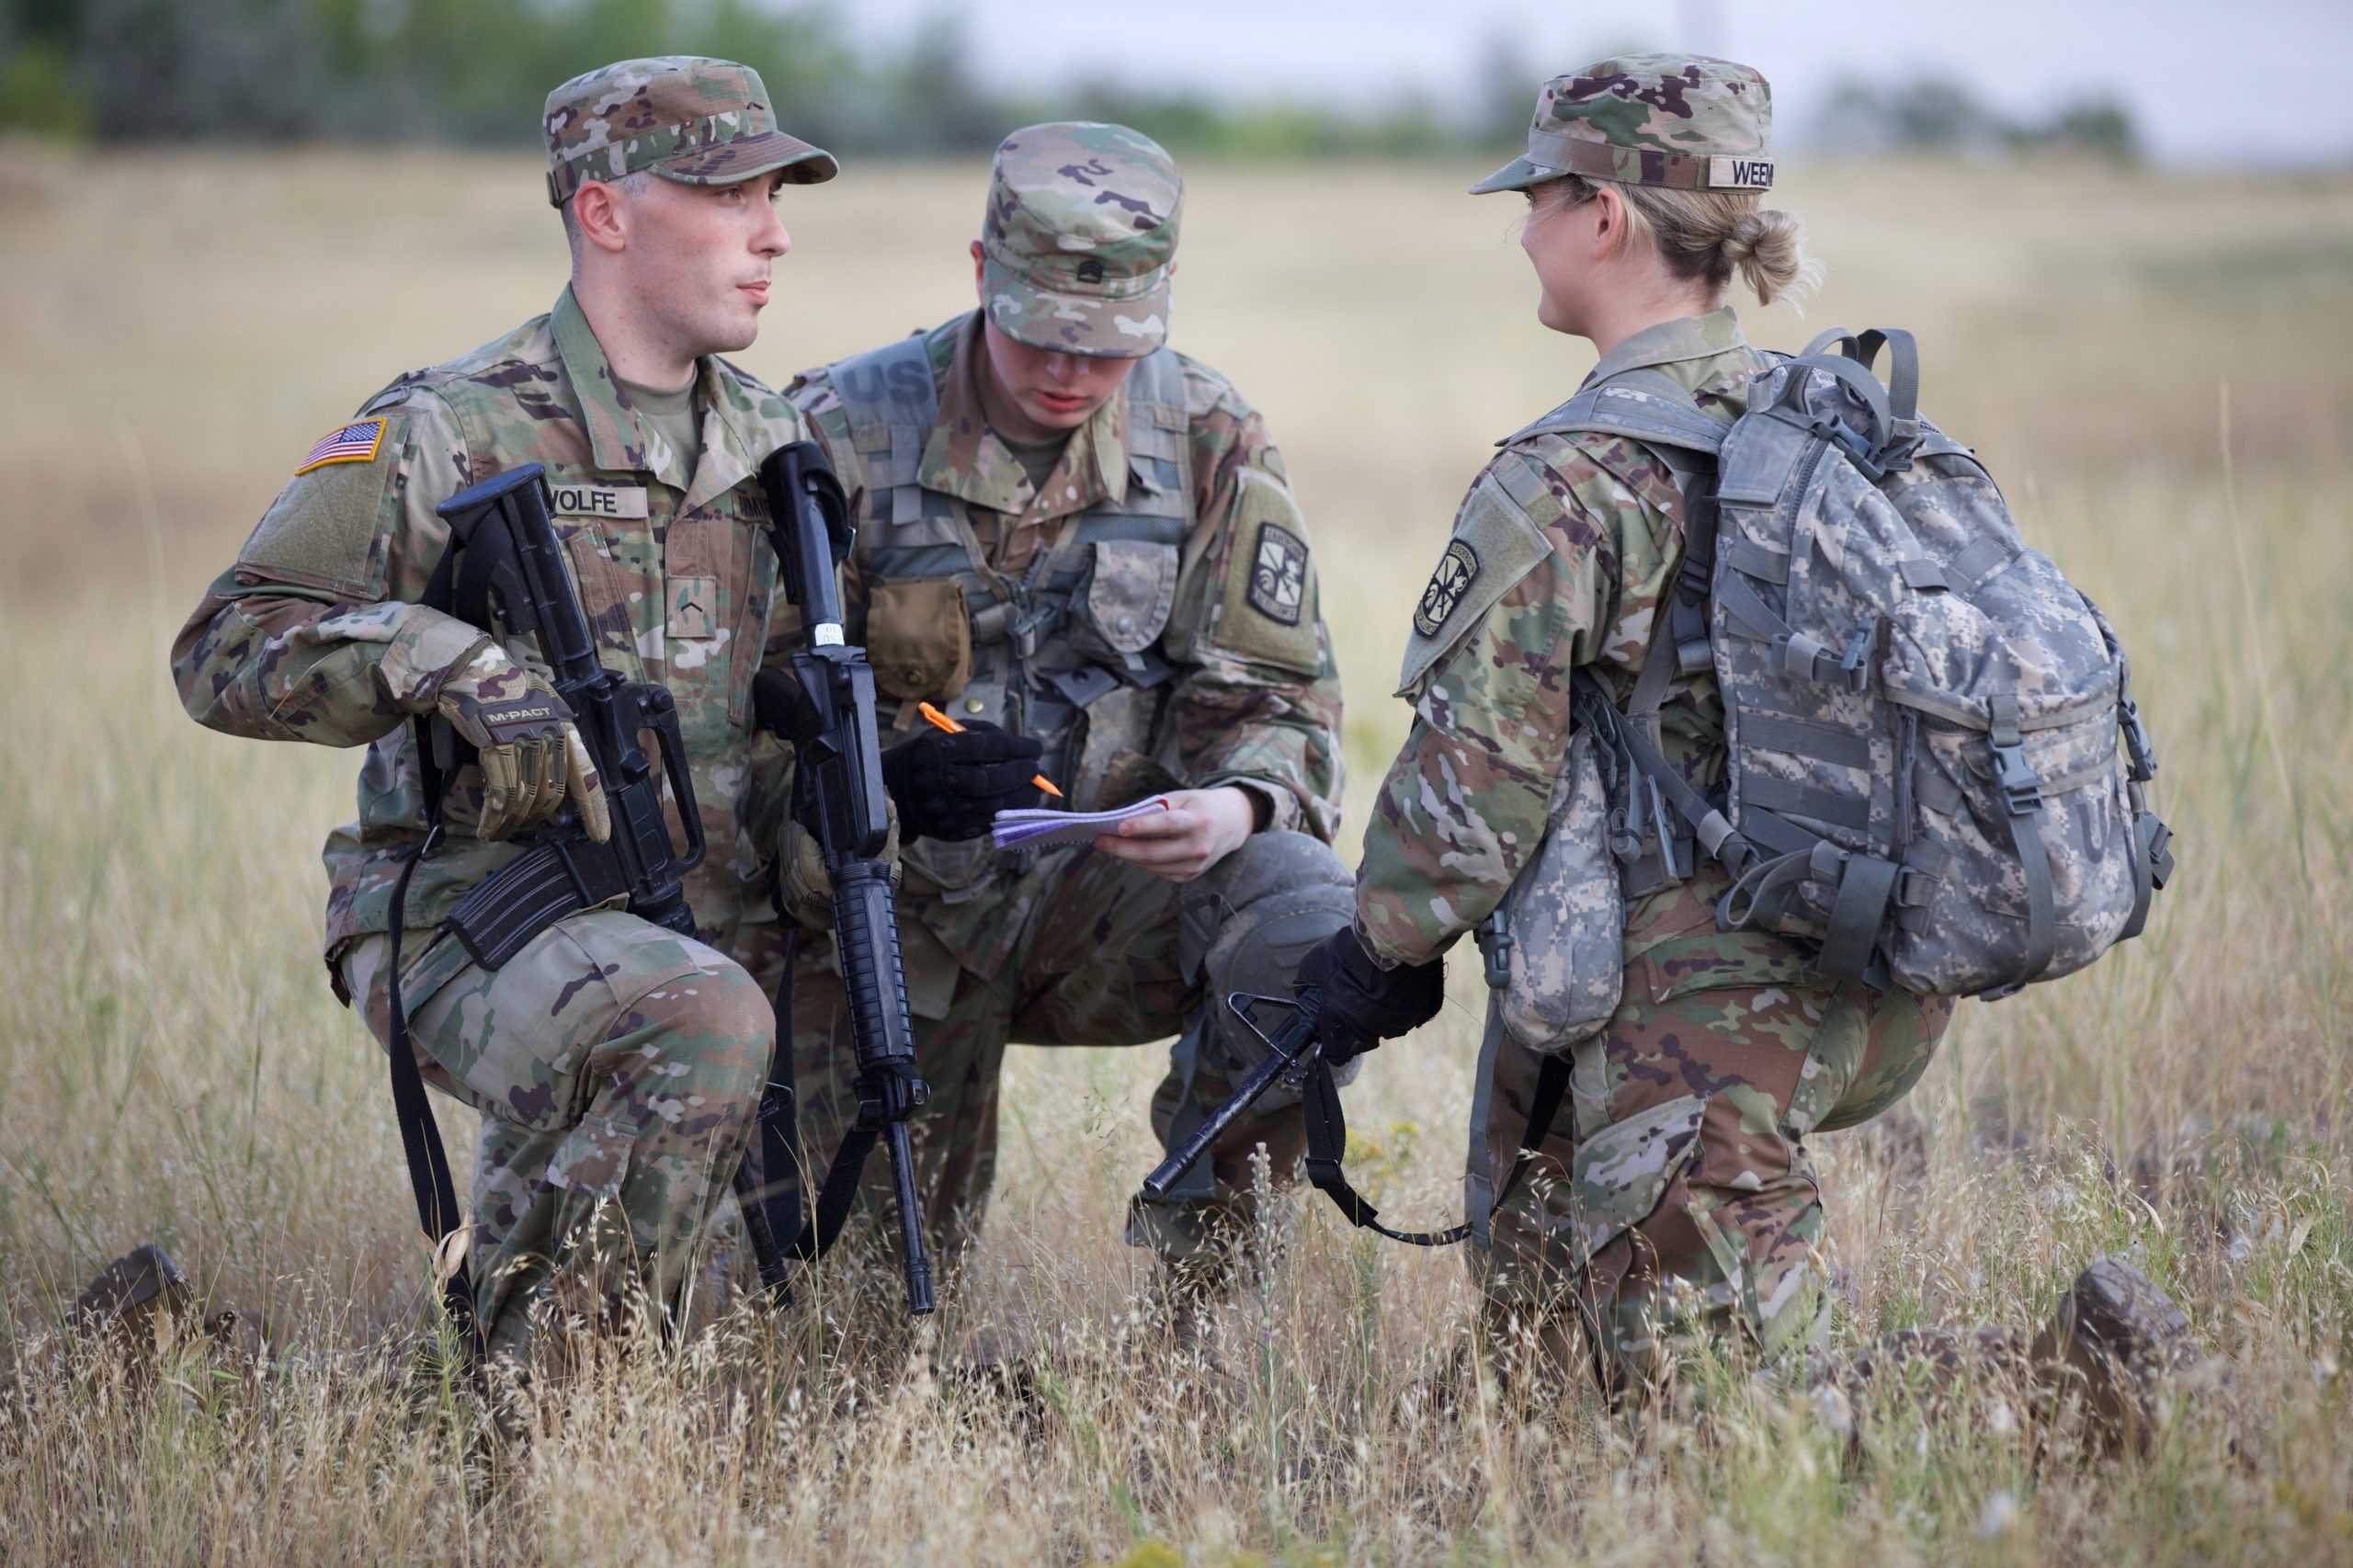 three people in military uniforms holding guns kneel in field